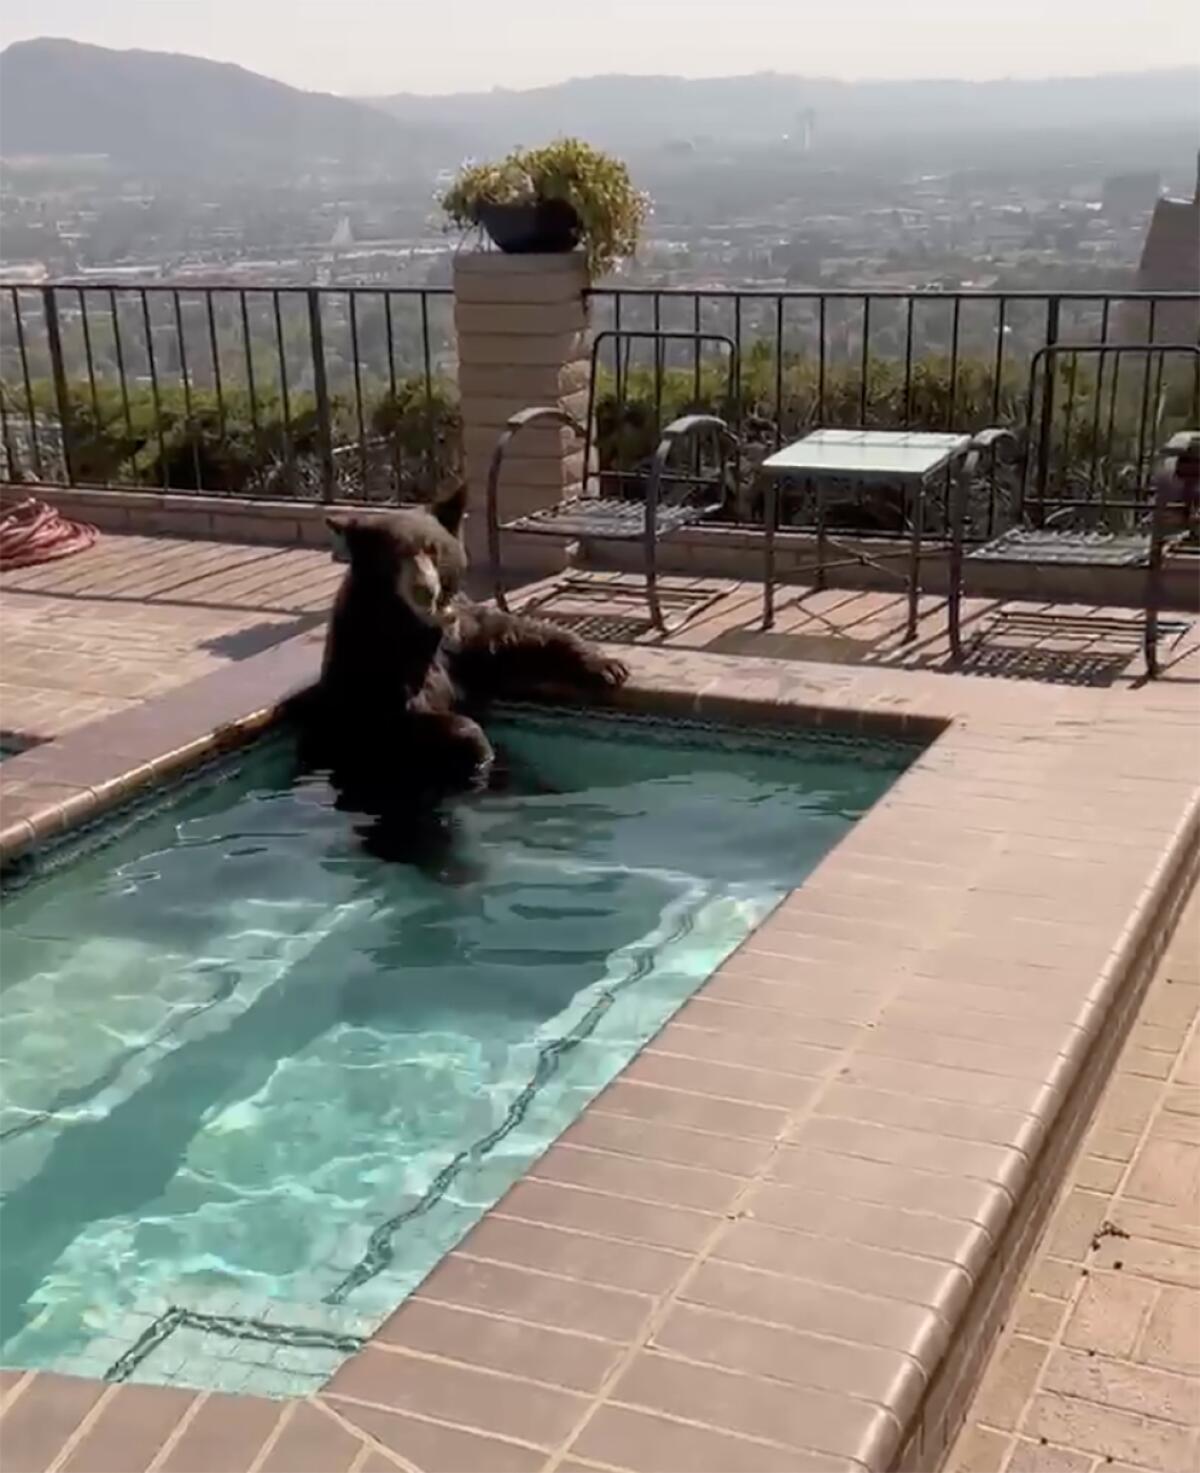 Video still of a bear in a Burbank pool.